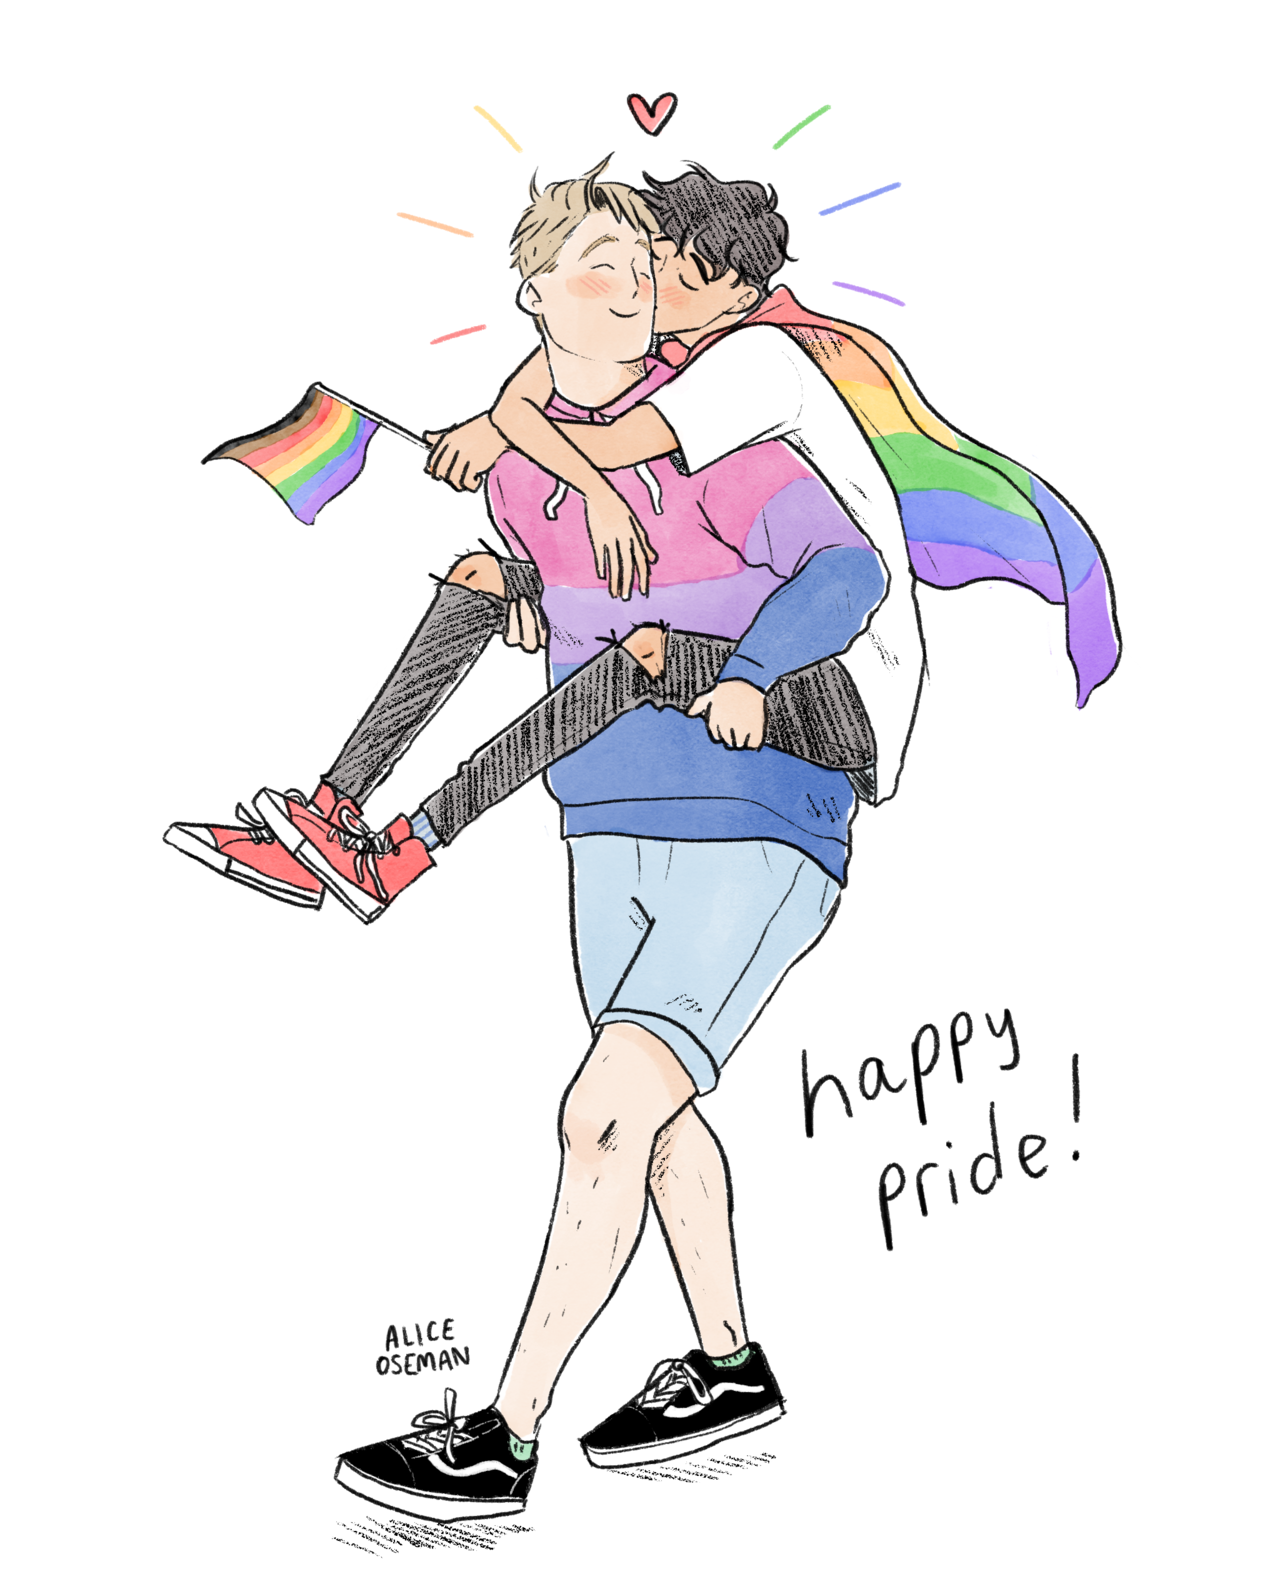 A Man Is Holding A Man With A Rainbow Flag